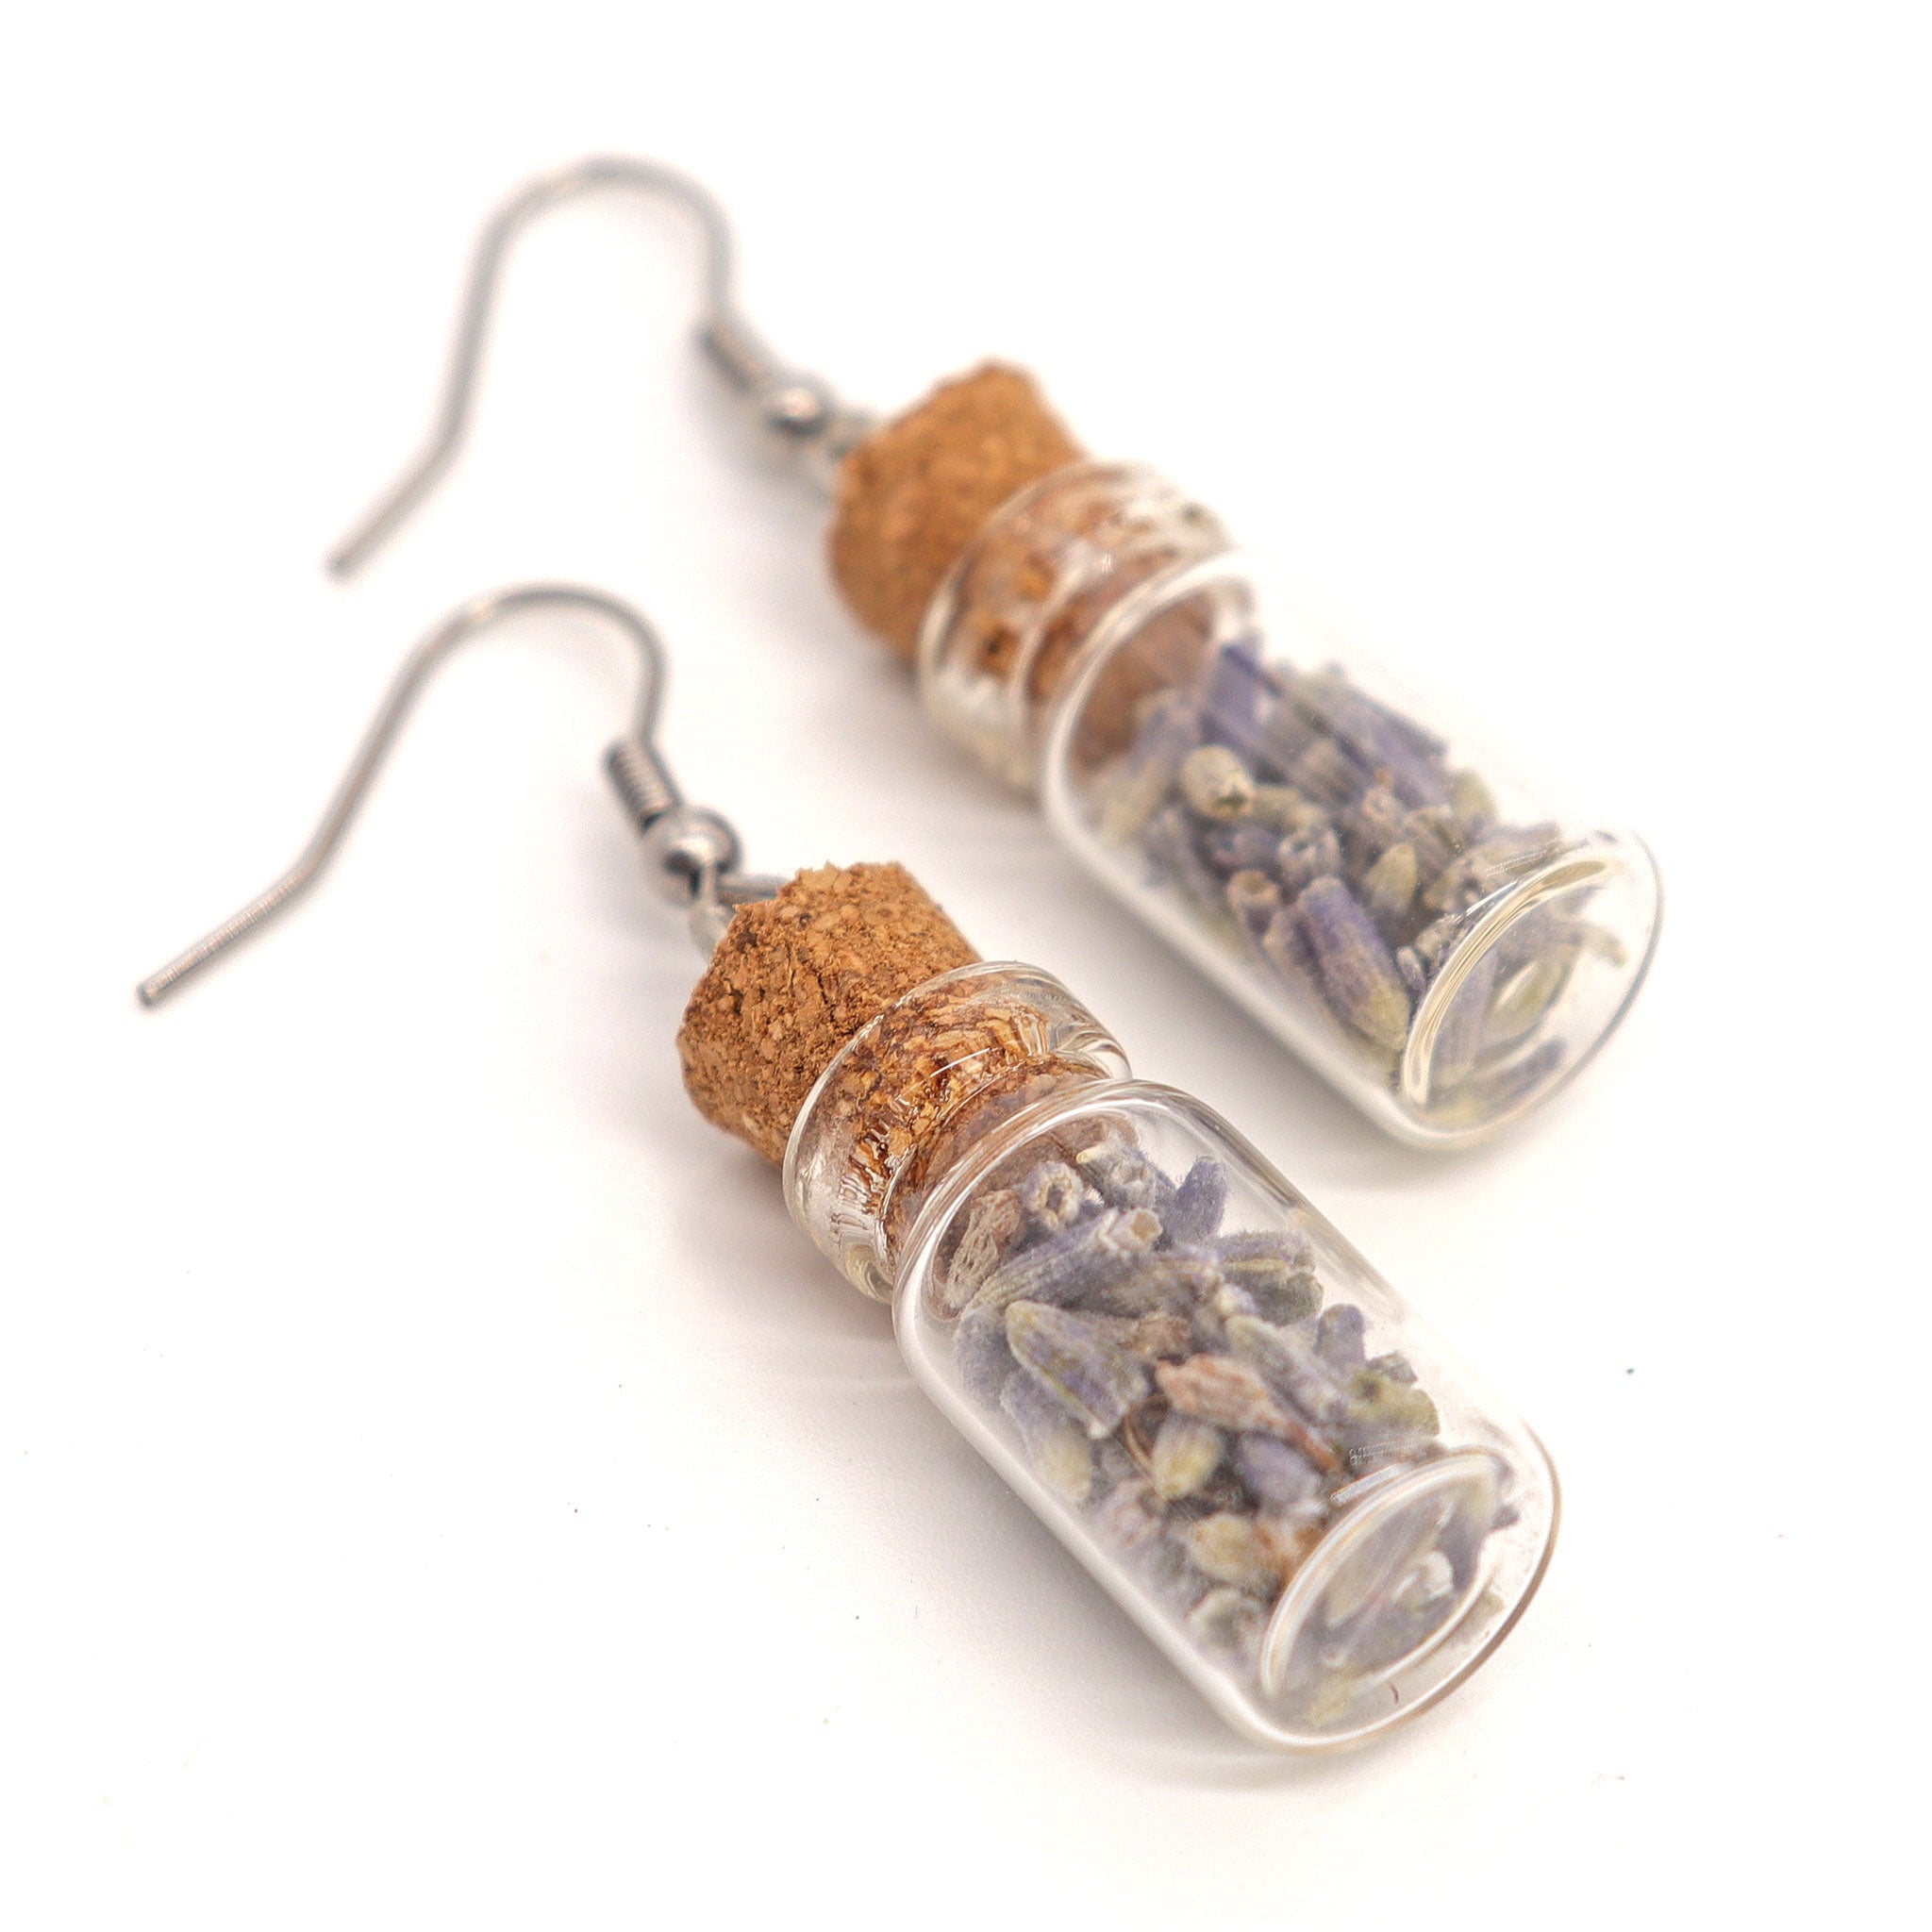 Lavender Herb Bottle Earrings - 13 Moons